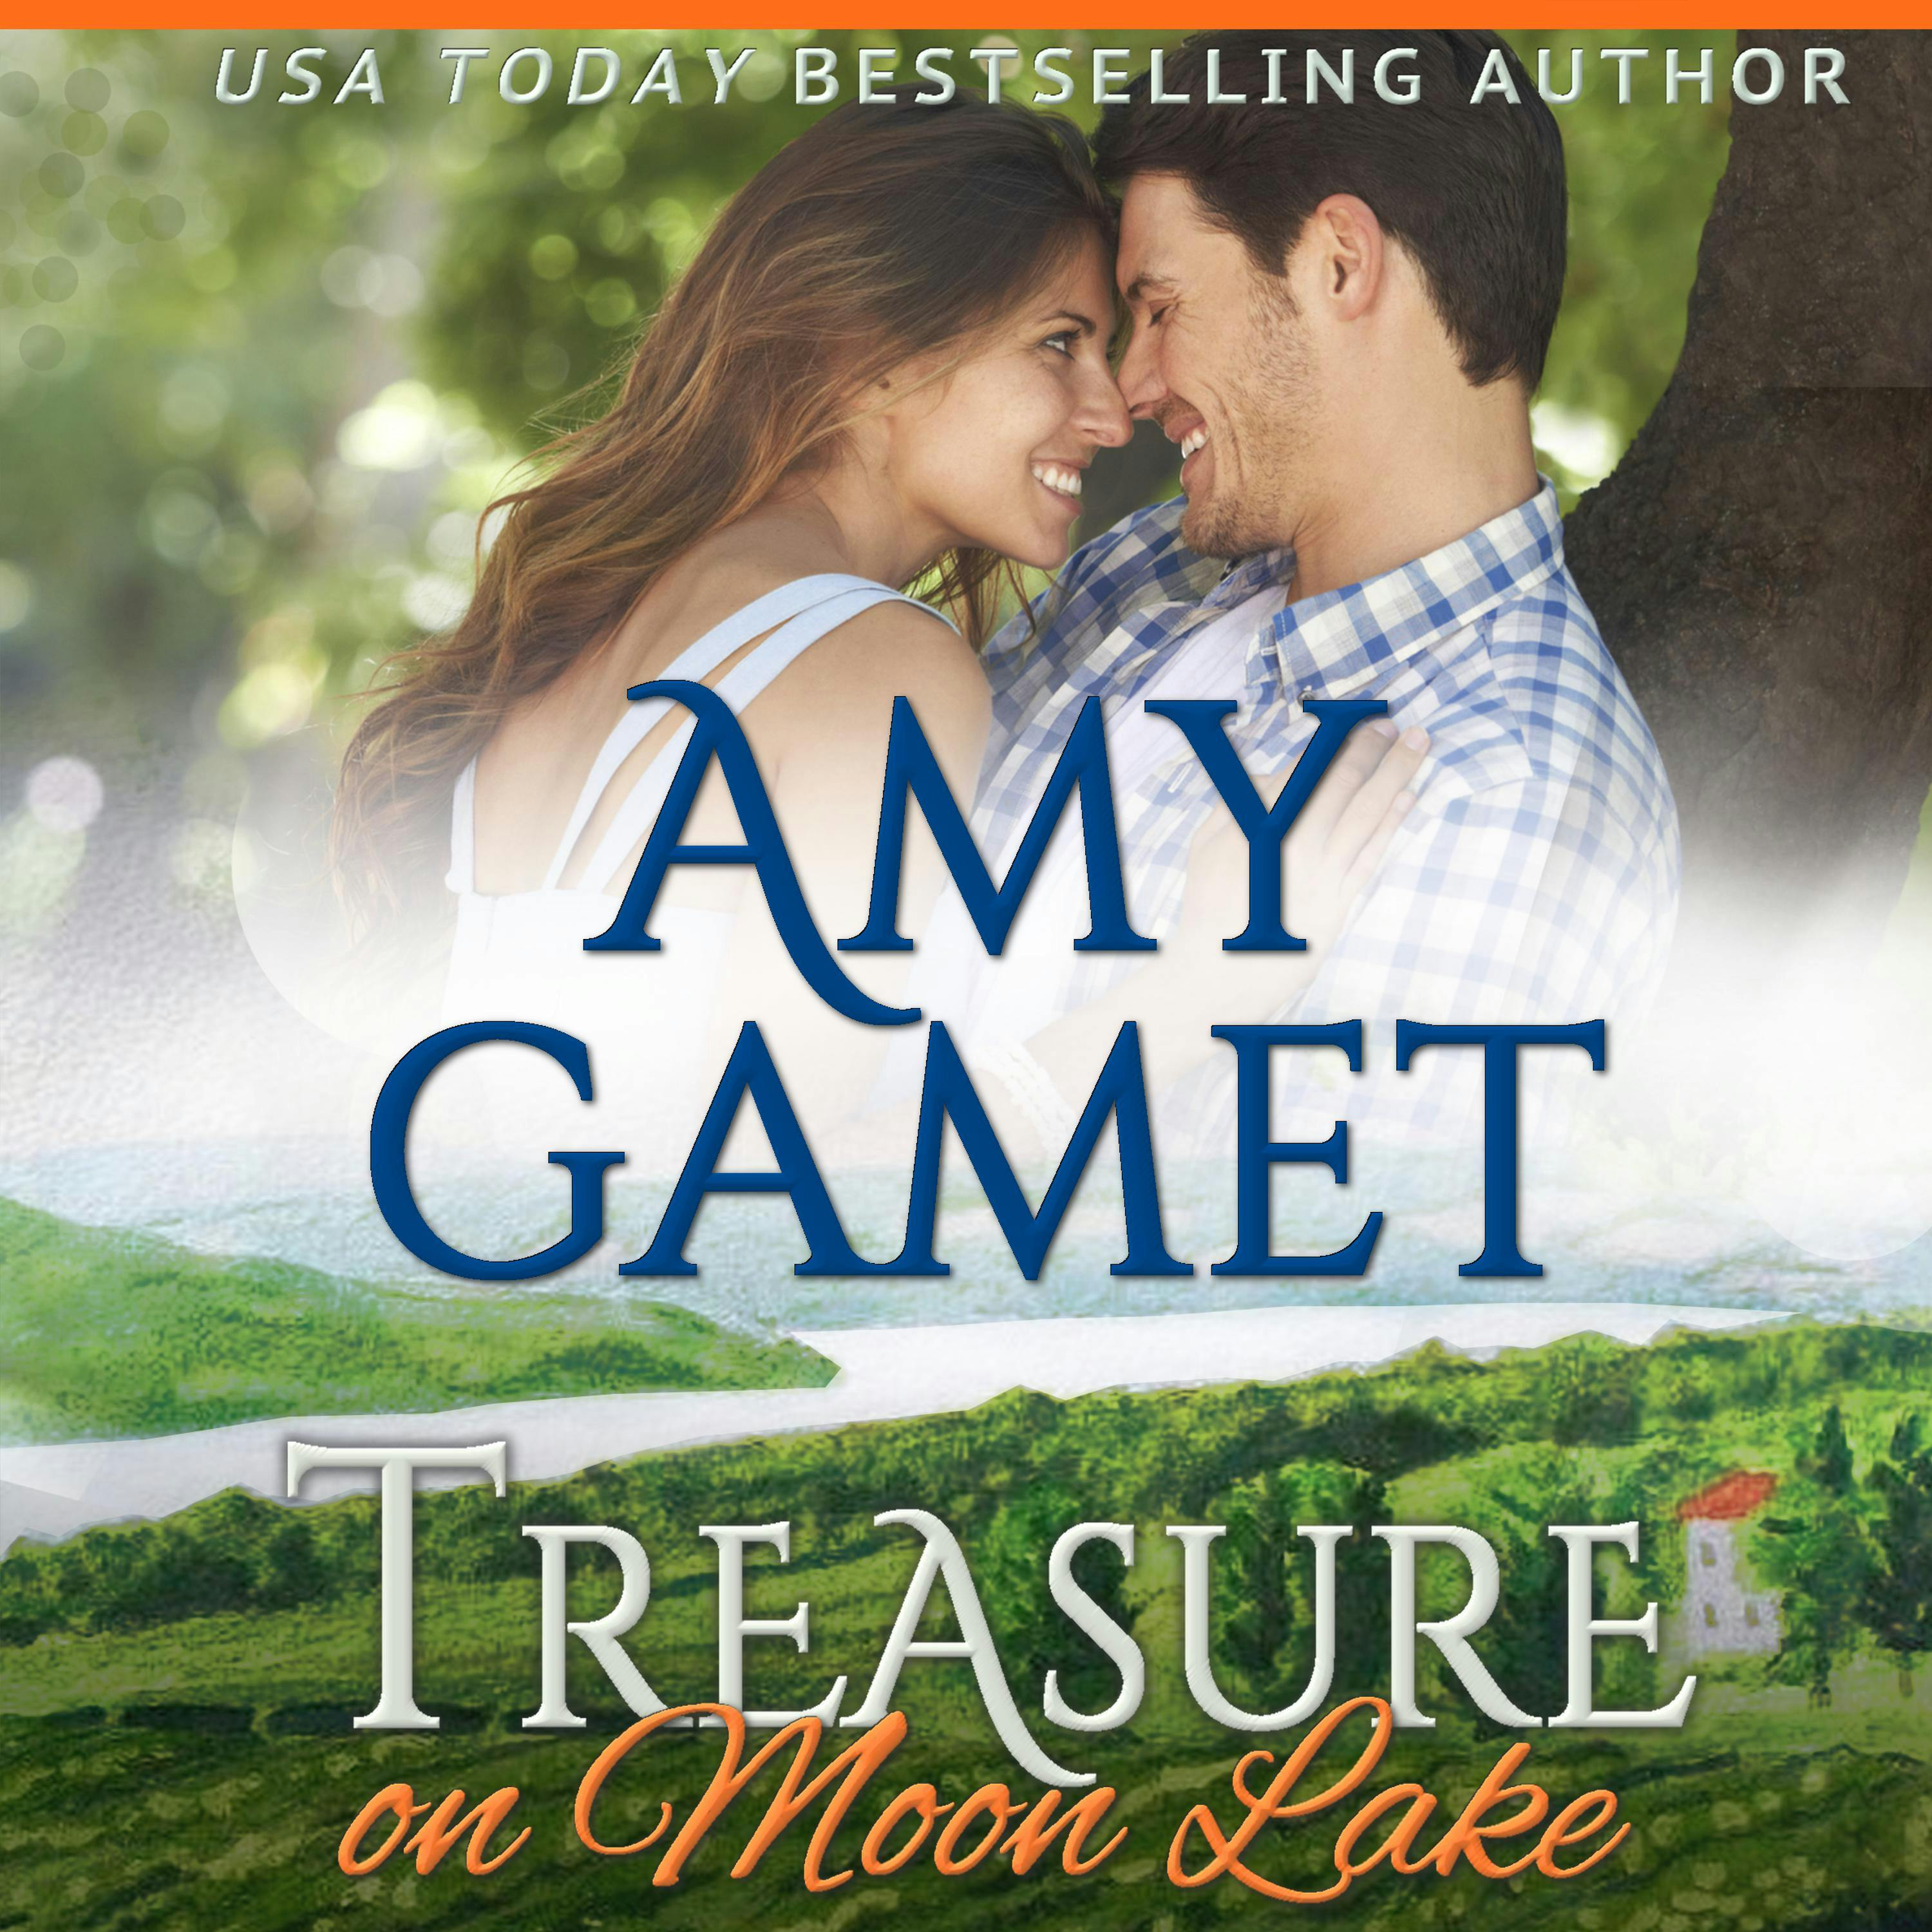 Treasure on Moon Lake - Amy Gamet